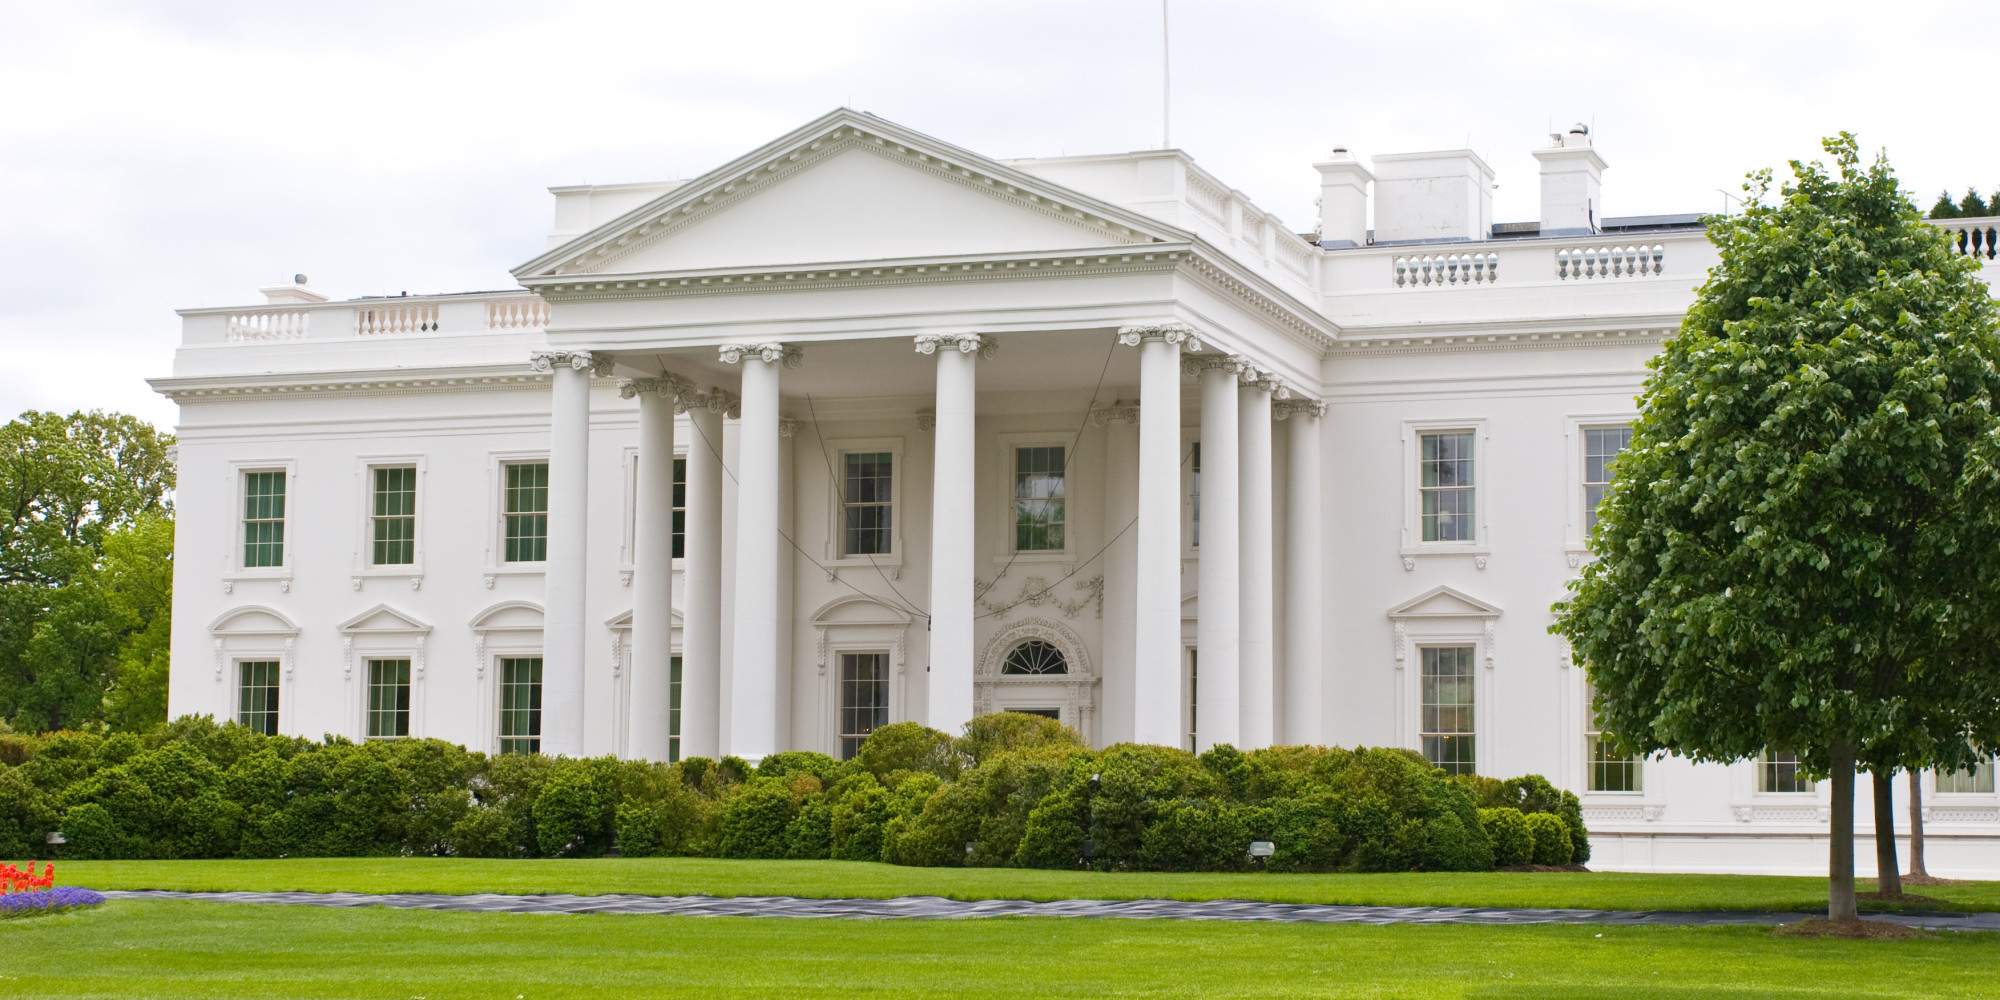 The facade of the White House.